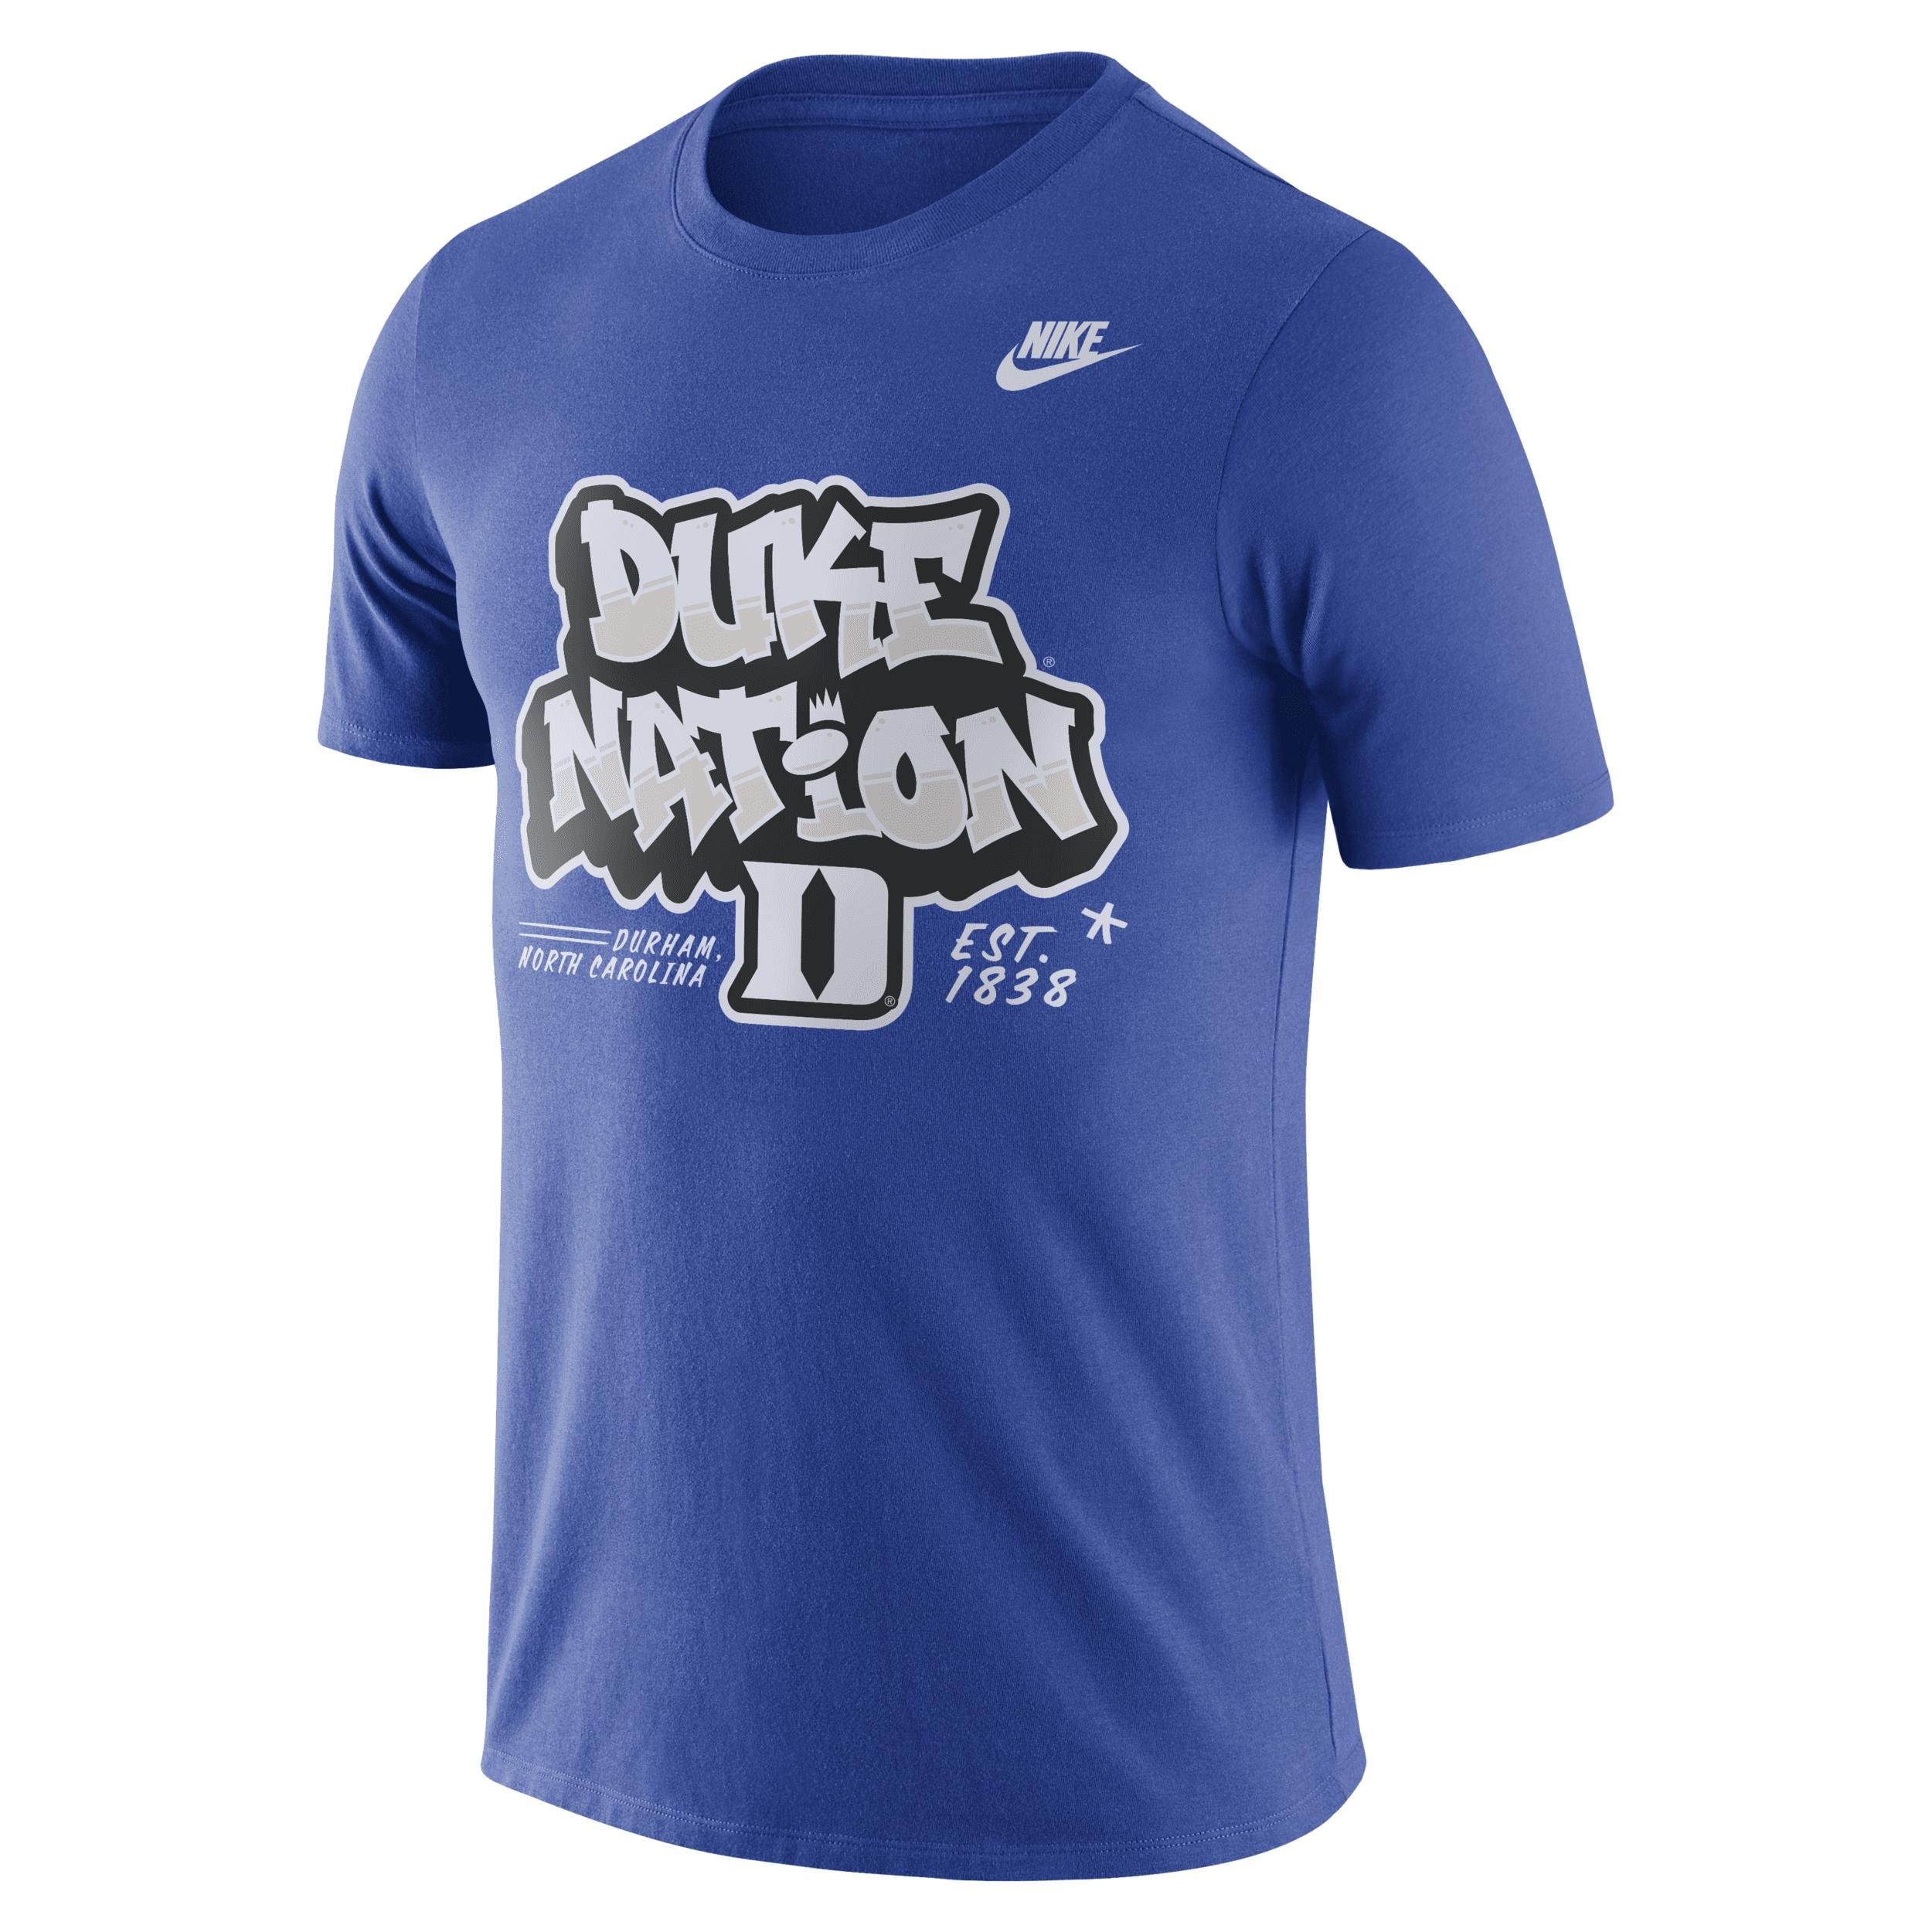 Duke Nike Men's College T-Shirt by NIKE